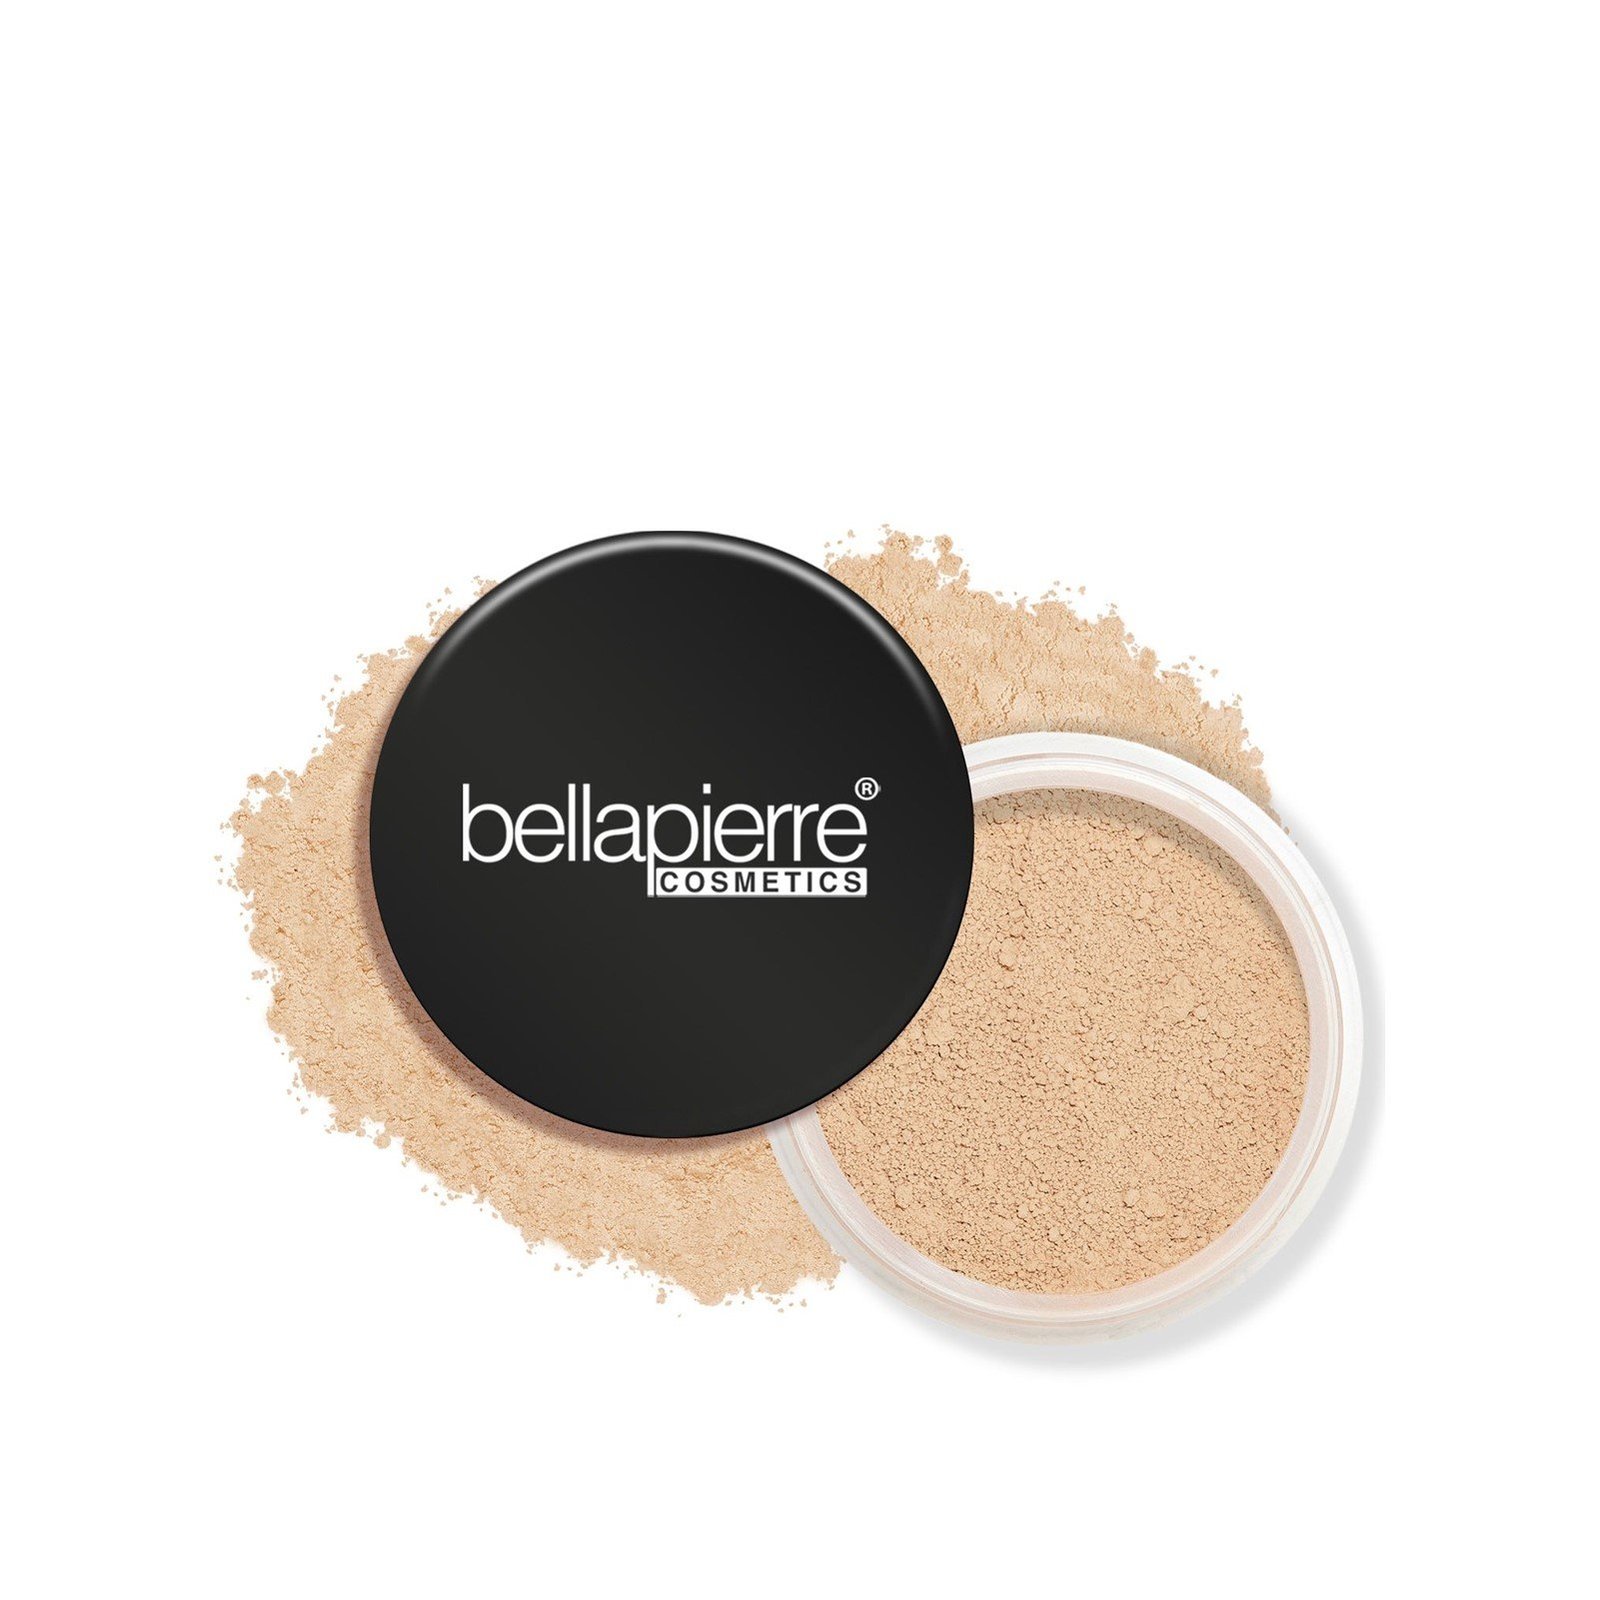 Bellapierre Cosmetics Mineral Foundation SPF15 Biscotti 9g (0.32oz)